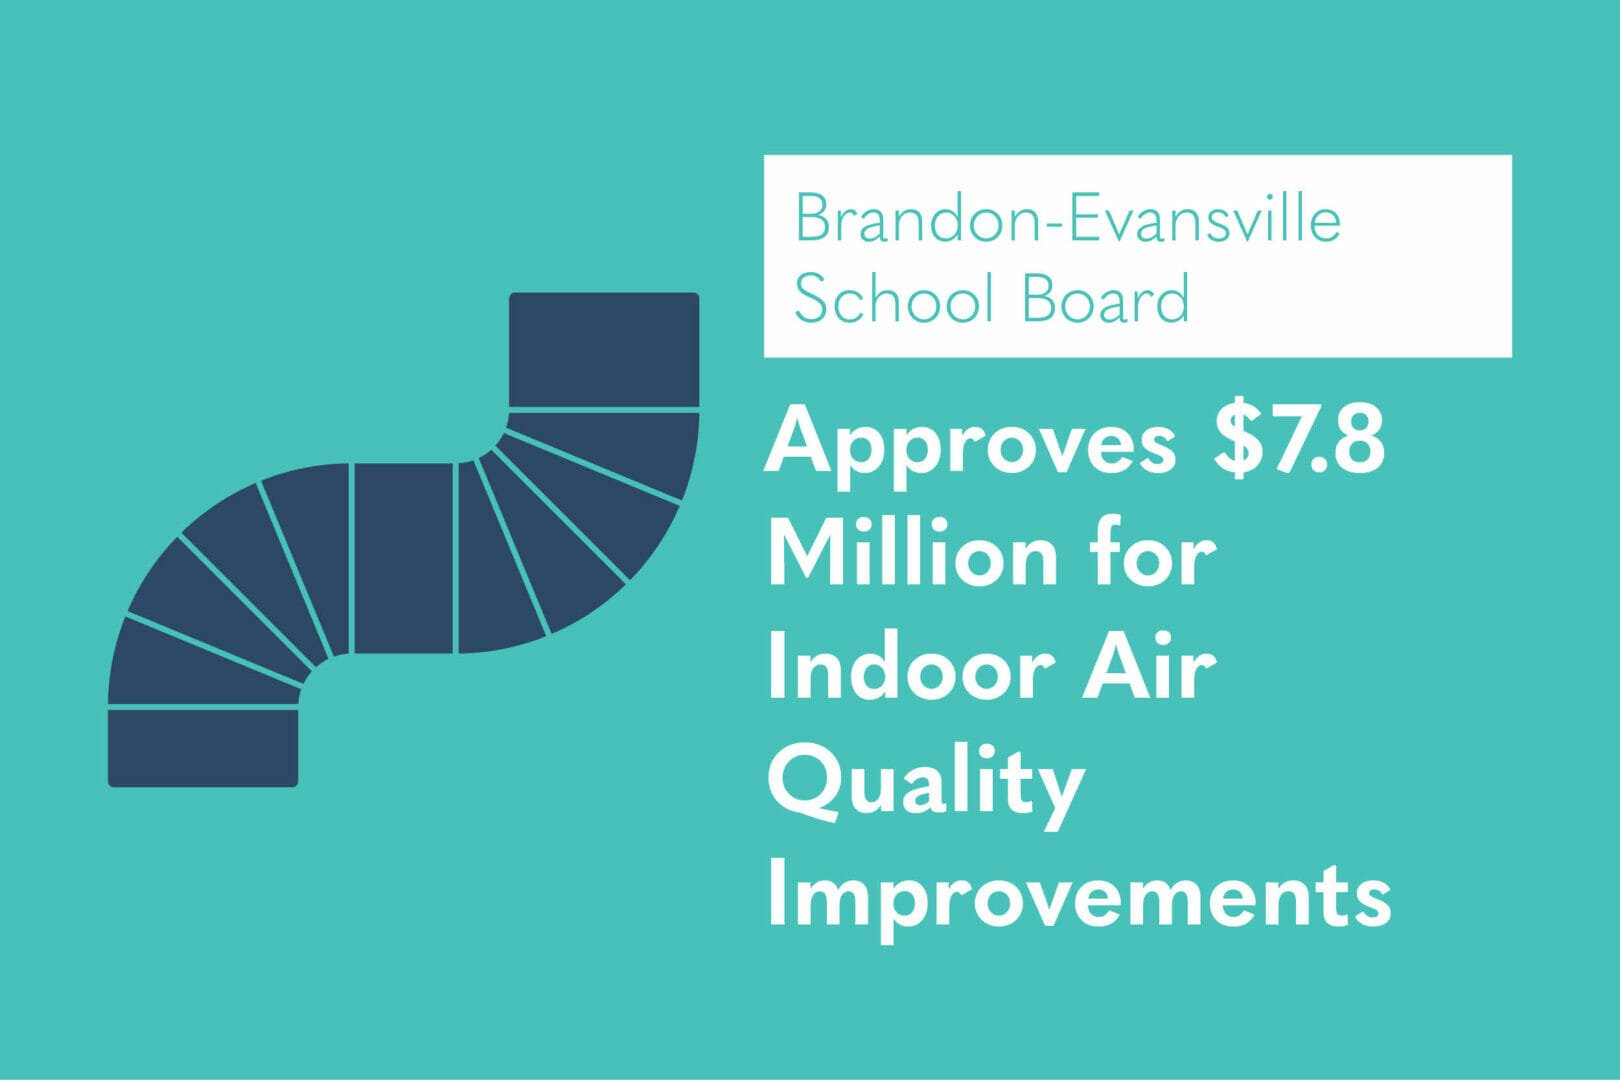 Brandon-Evansville School Board Approves Indoor Air Quality Improvements